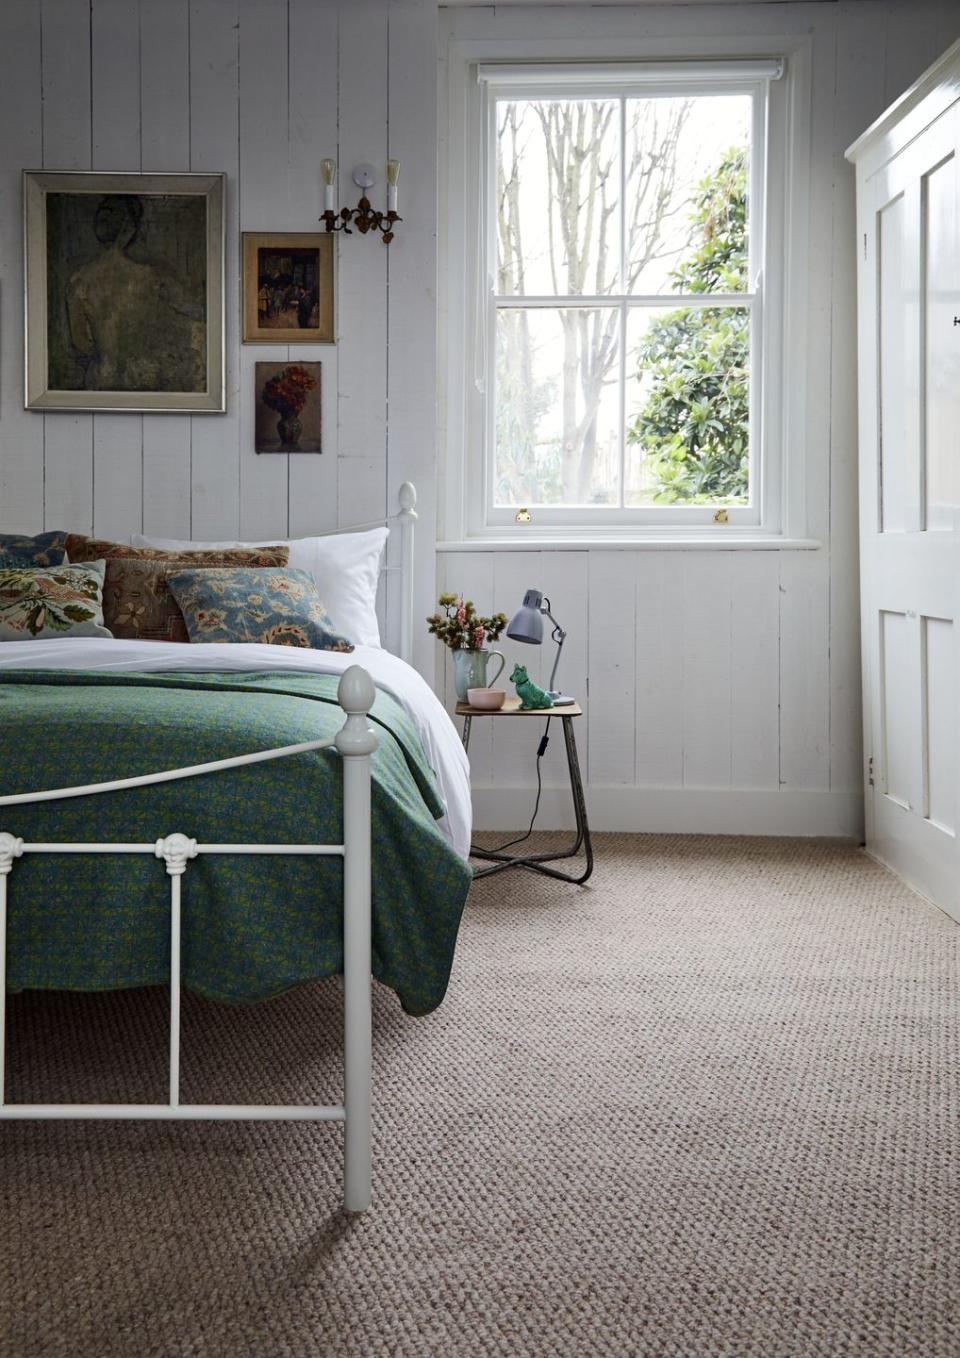 3) Green bedroom ideas: farmhouse